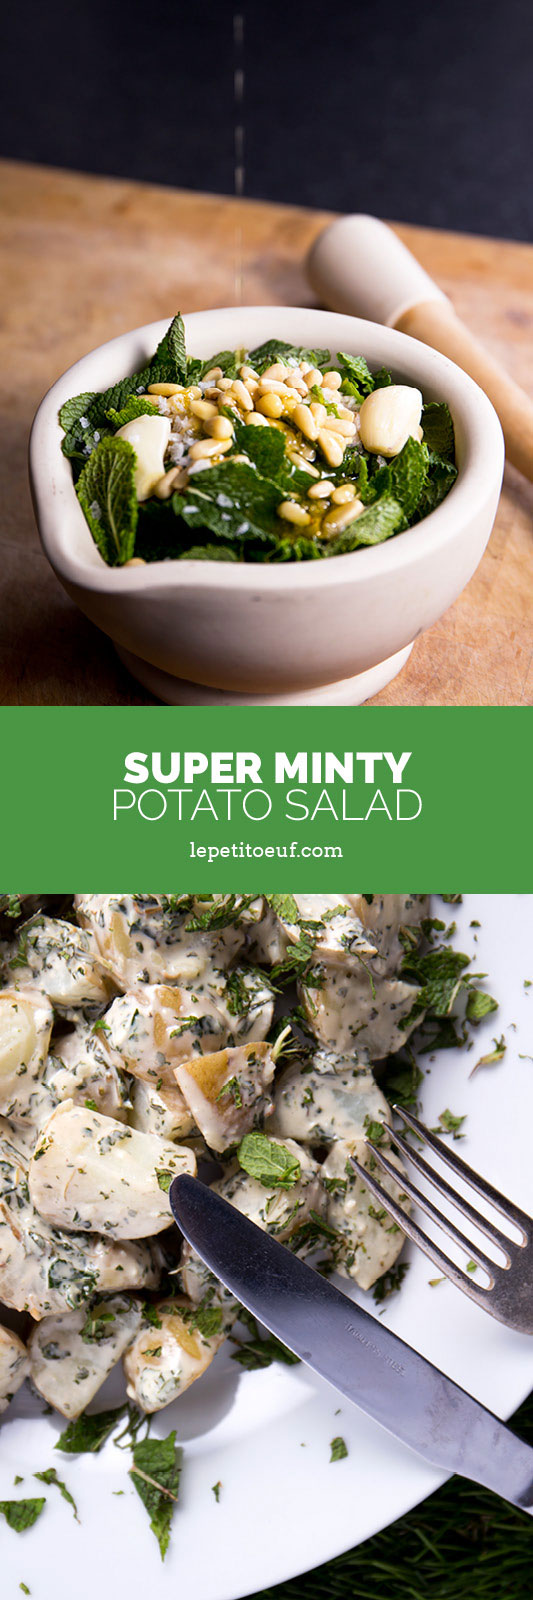 Super minty potato salad